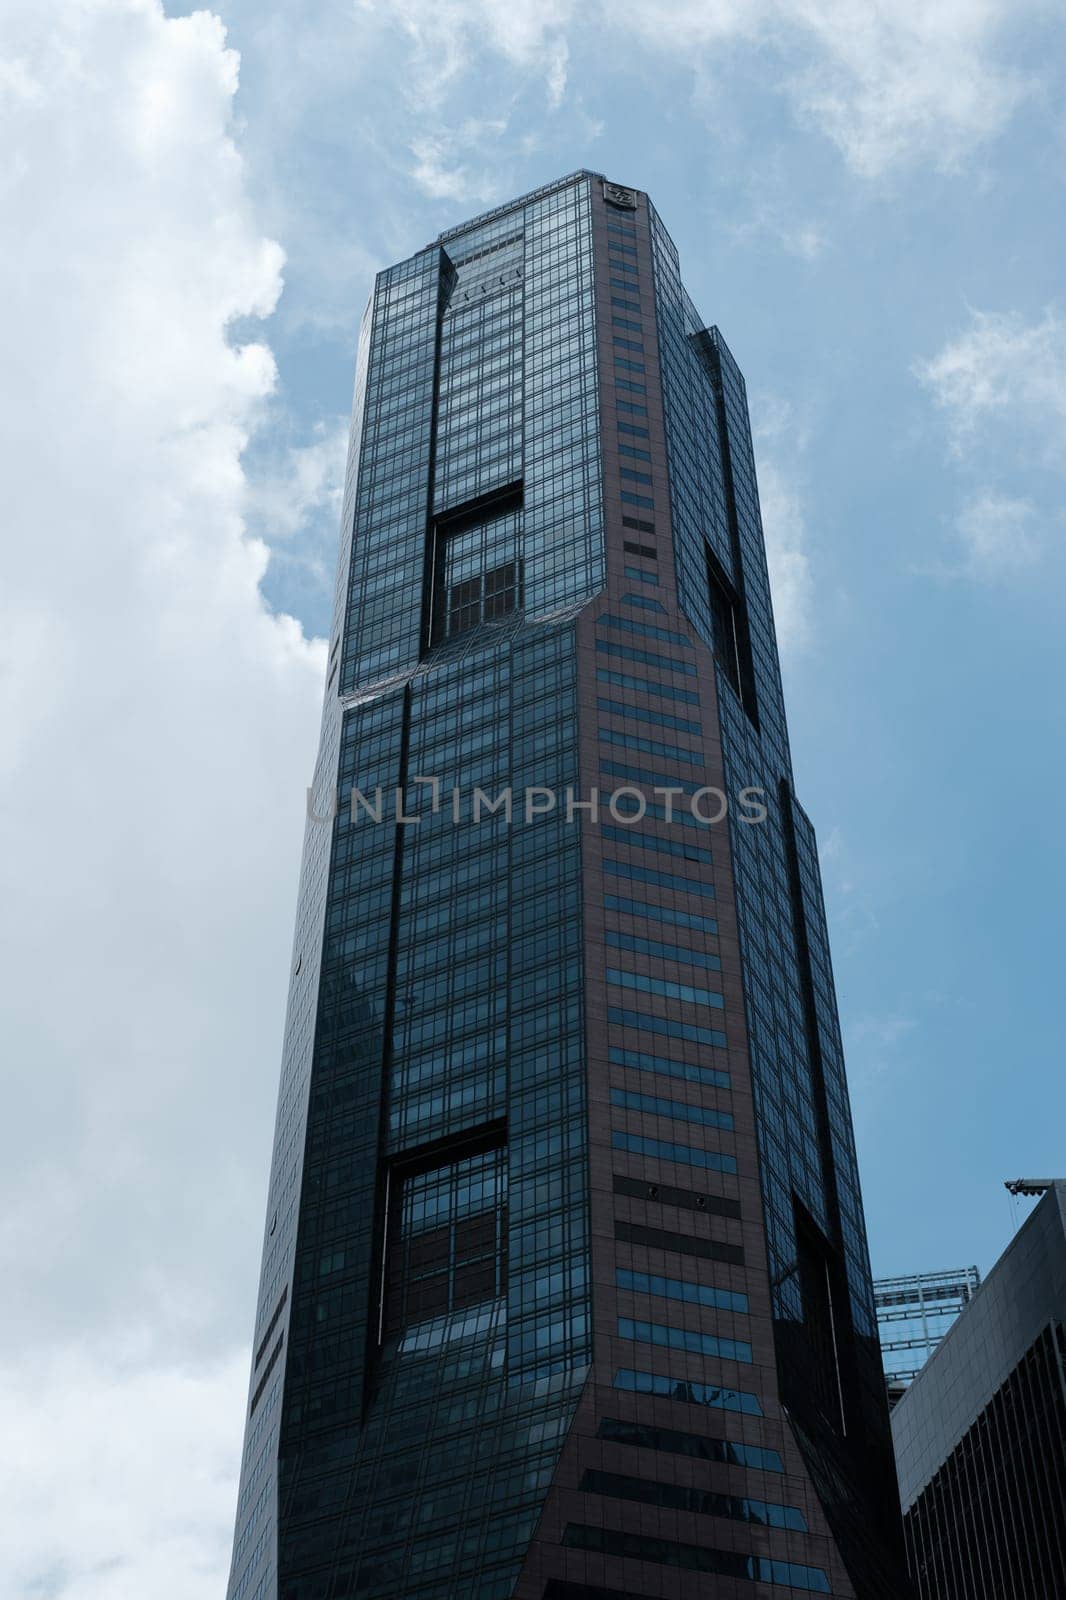 Blue Business Building Mirroring Sky by jinhongljh